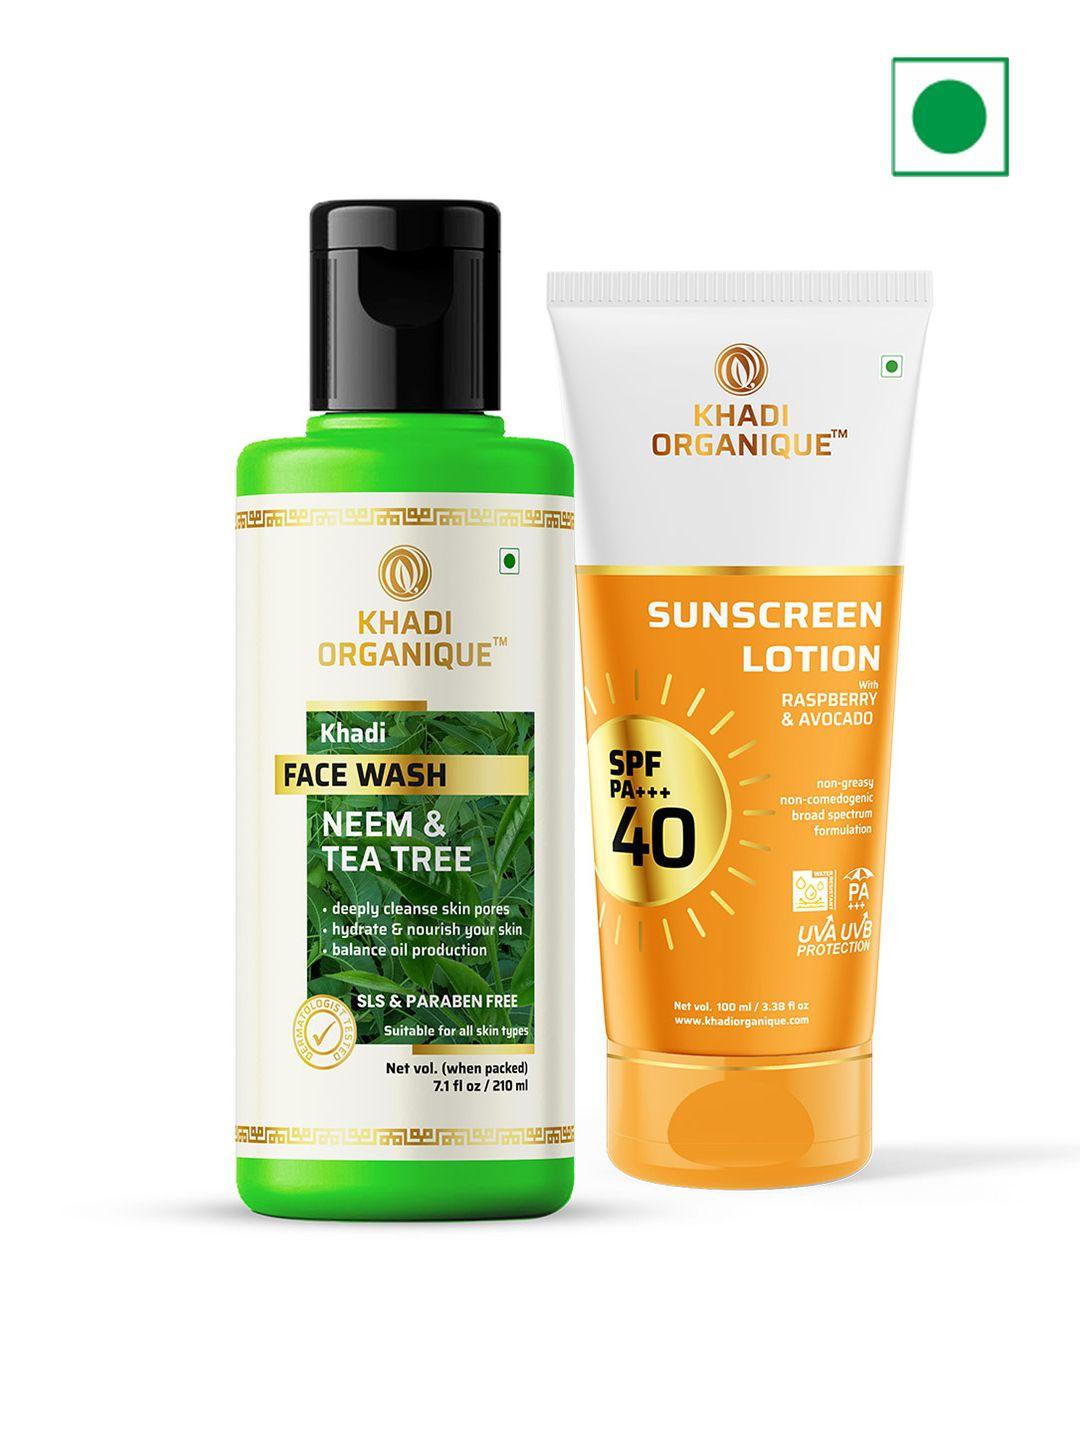 khadi organique neem tea tree face wash with spf-40 suncreen lotion 310ml